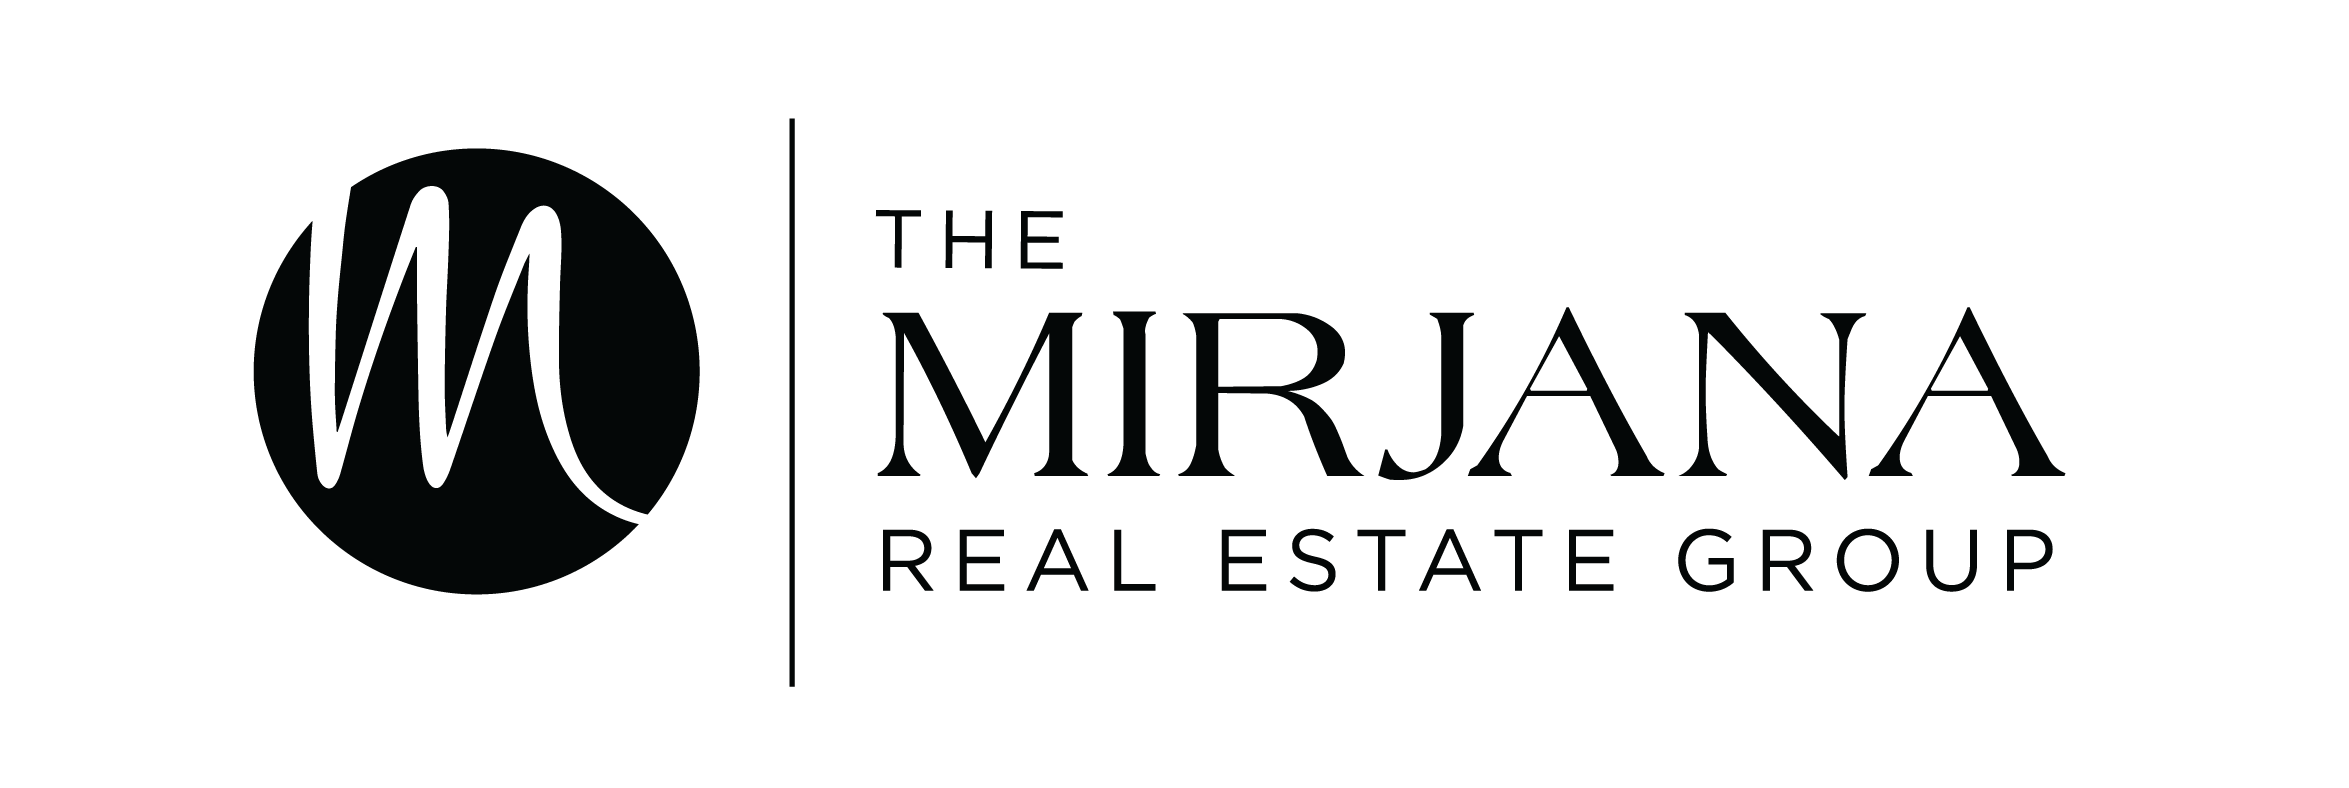 The MIRJANA Real Estate Group